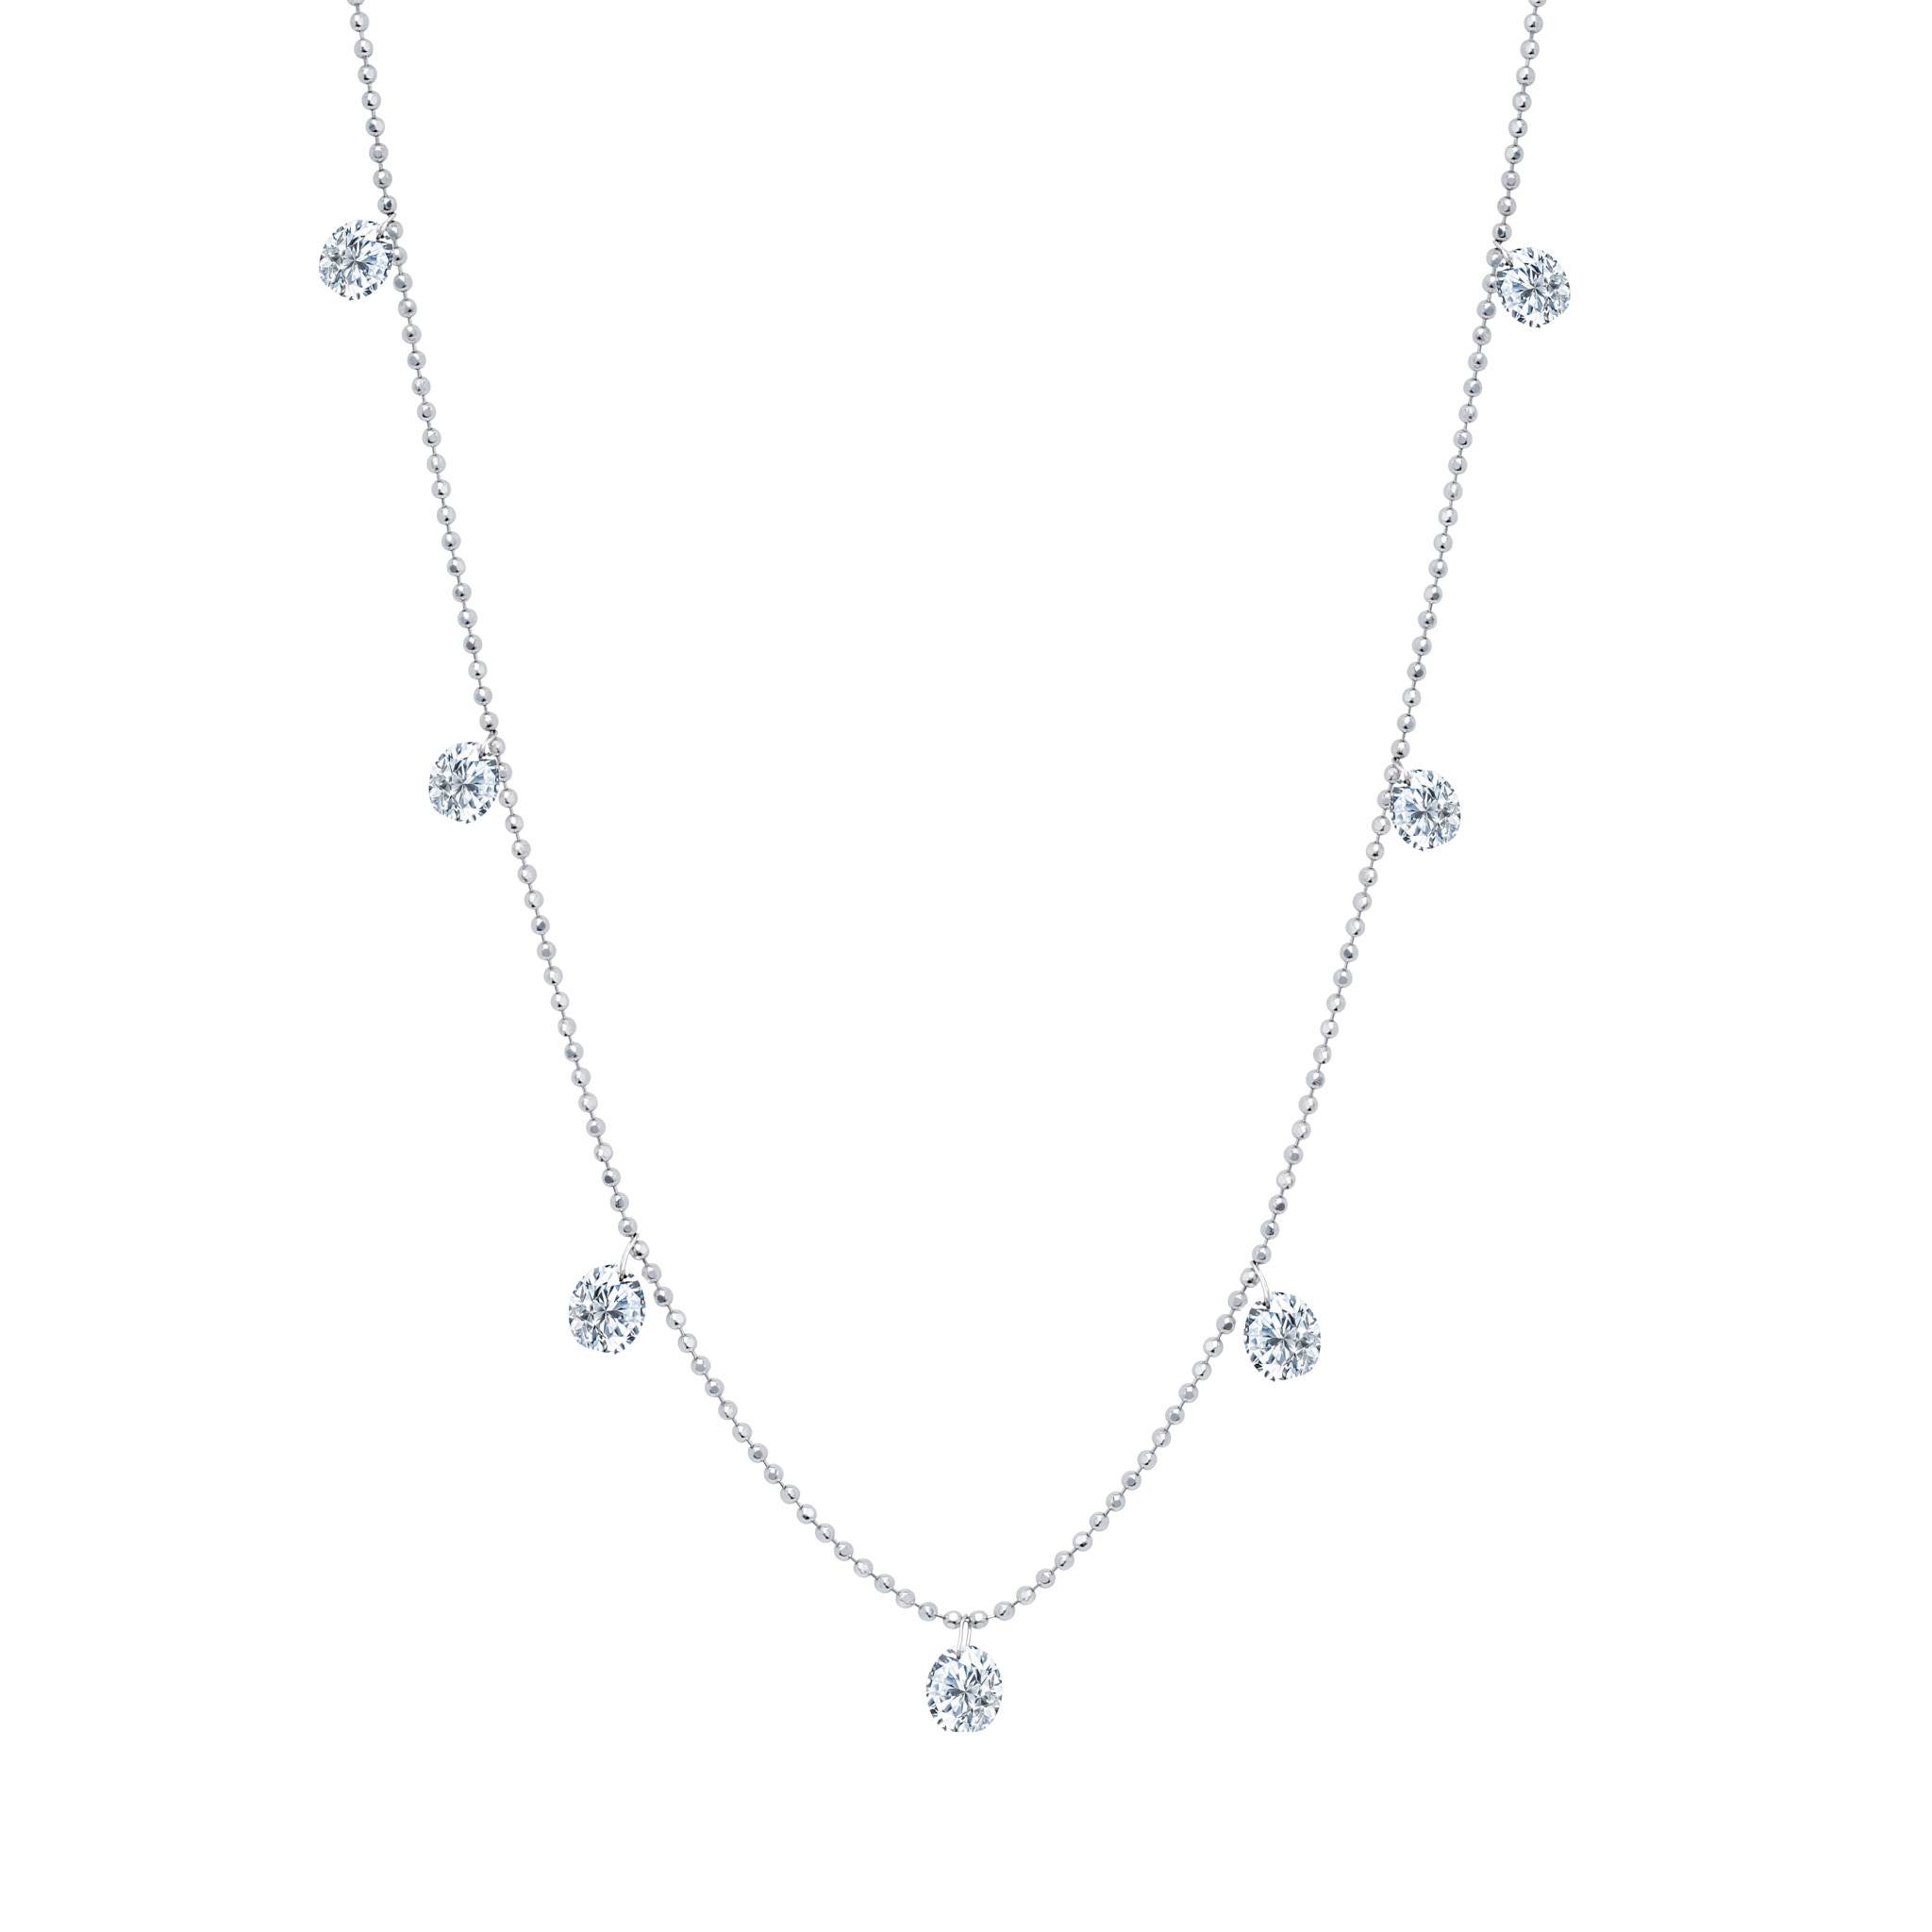 Graziela Gems - Necklace - Small Floating Diamond Necklace - White